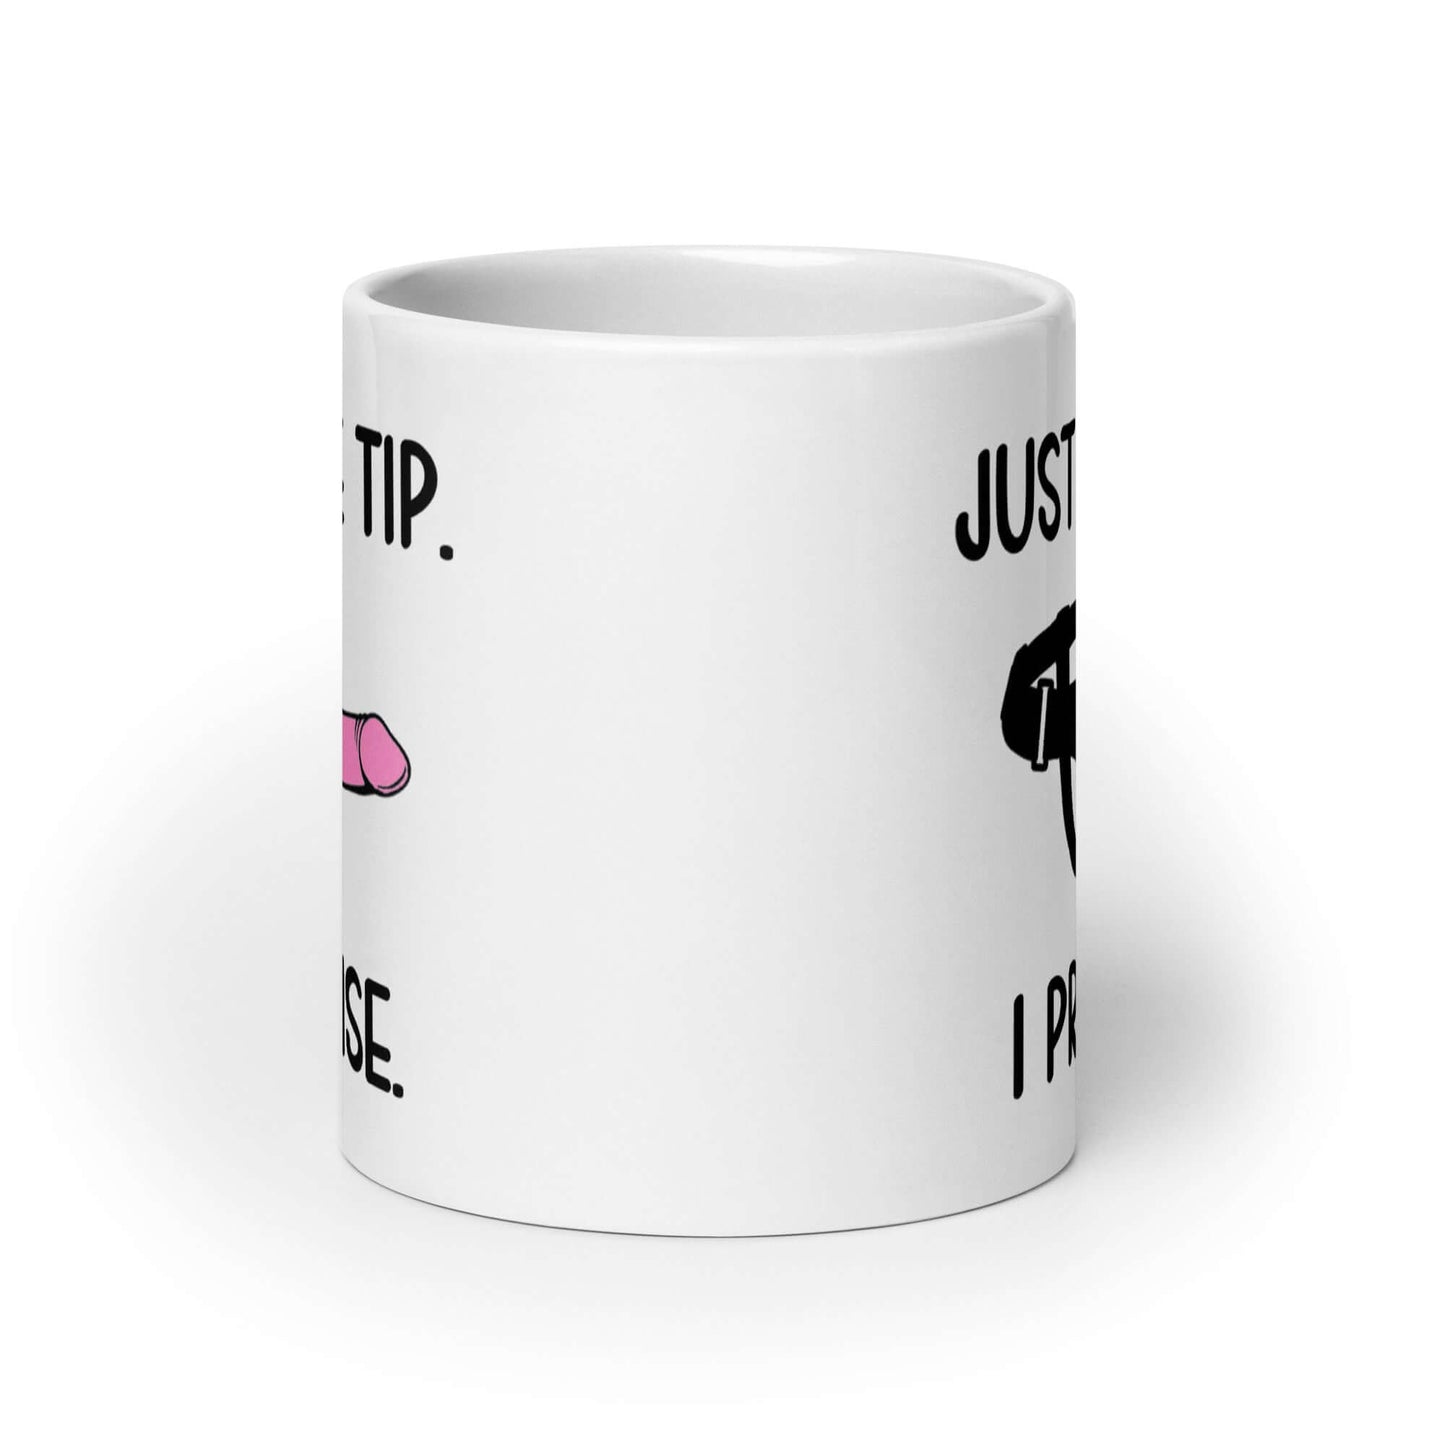 Just the tip. I promise. NSFW sexual humor strap on sex toy joke ceramic mug.